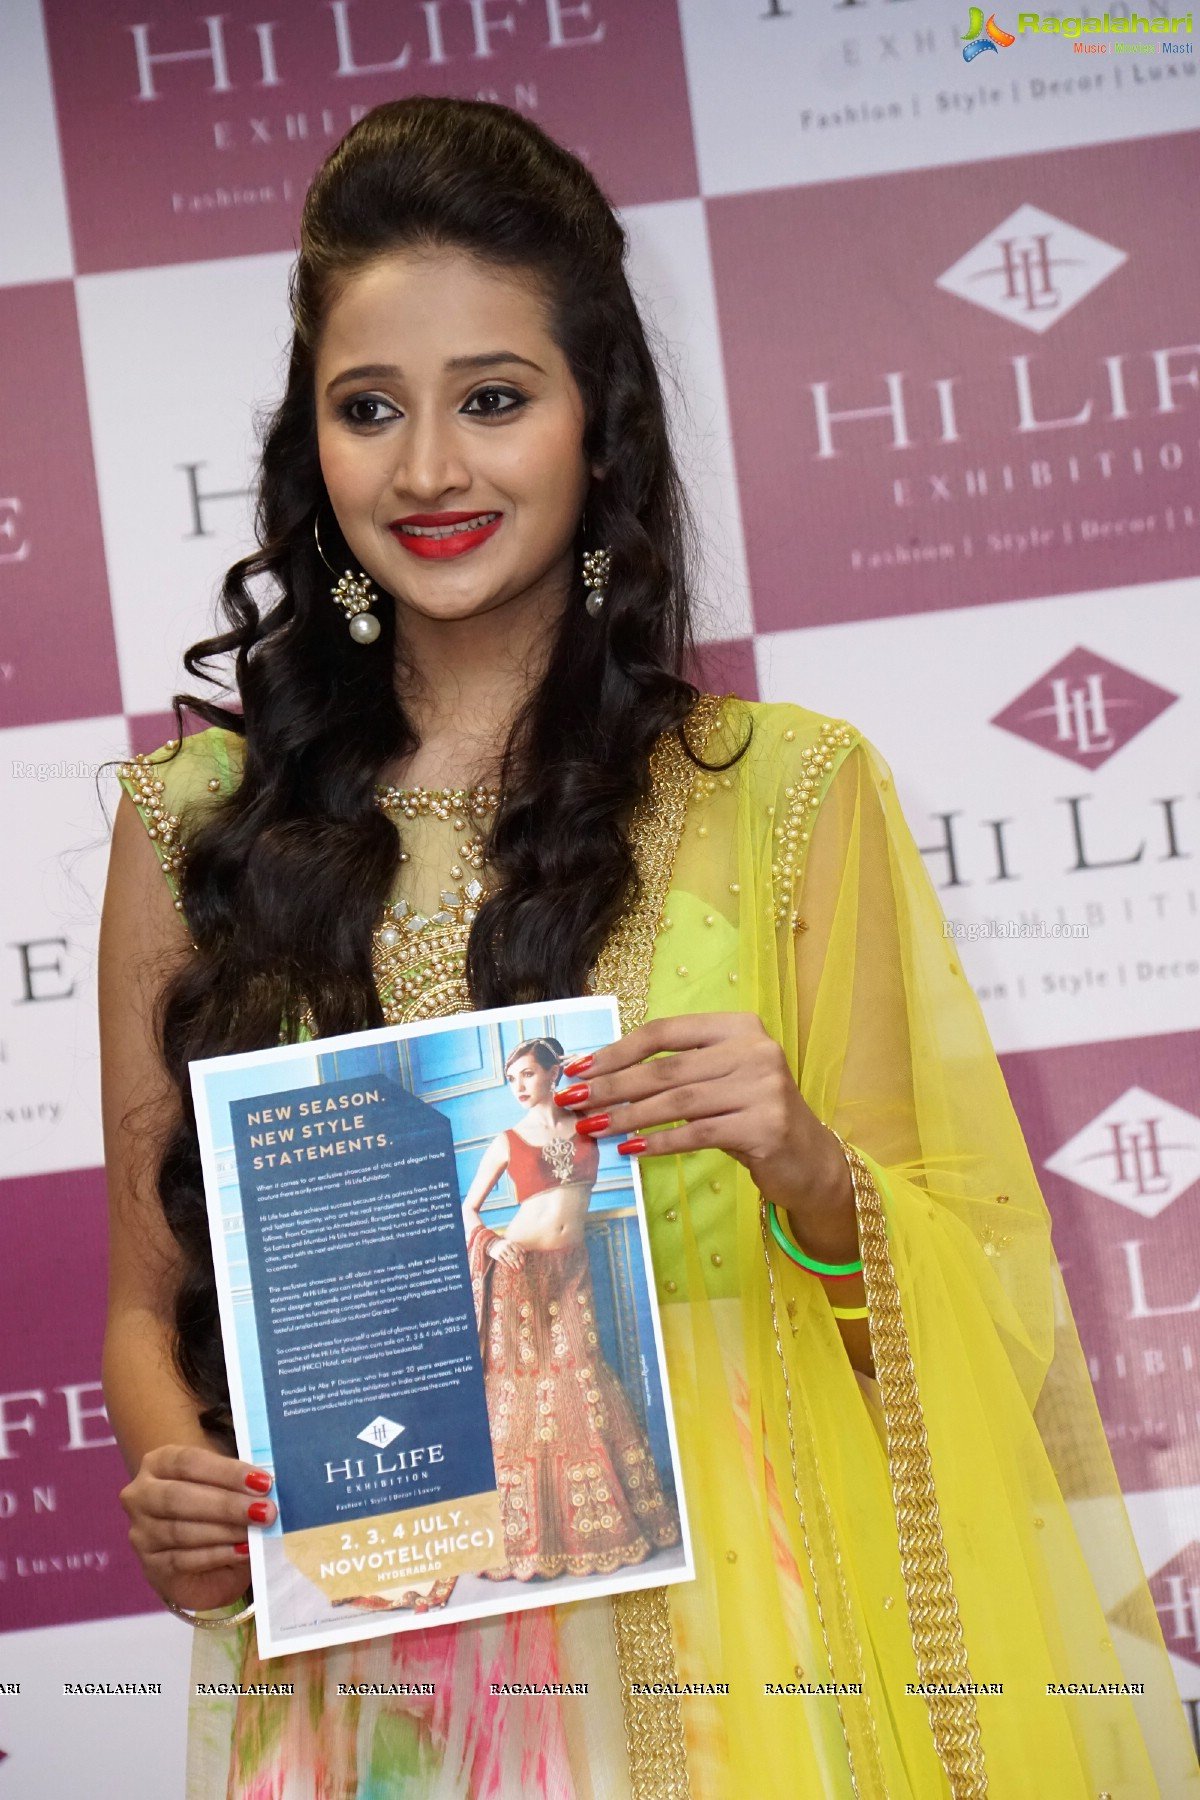 Hi Life Exhibition Brochure Launch